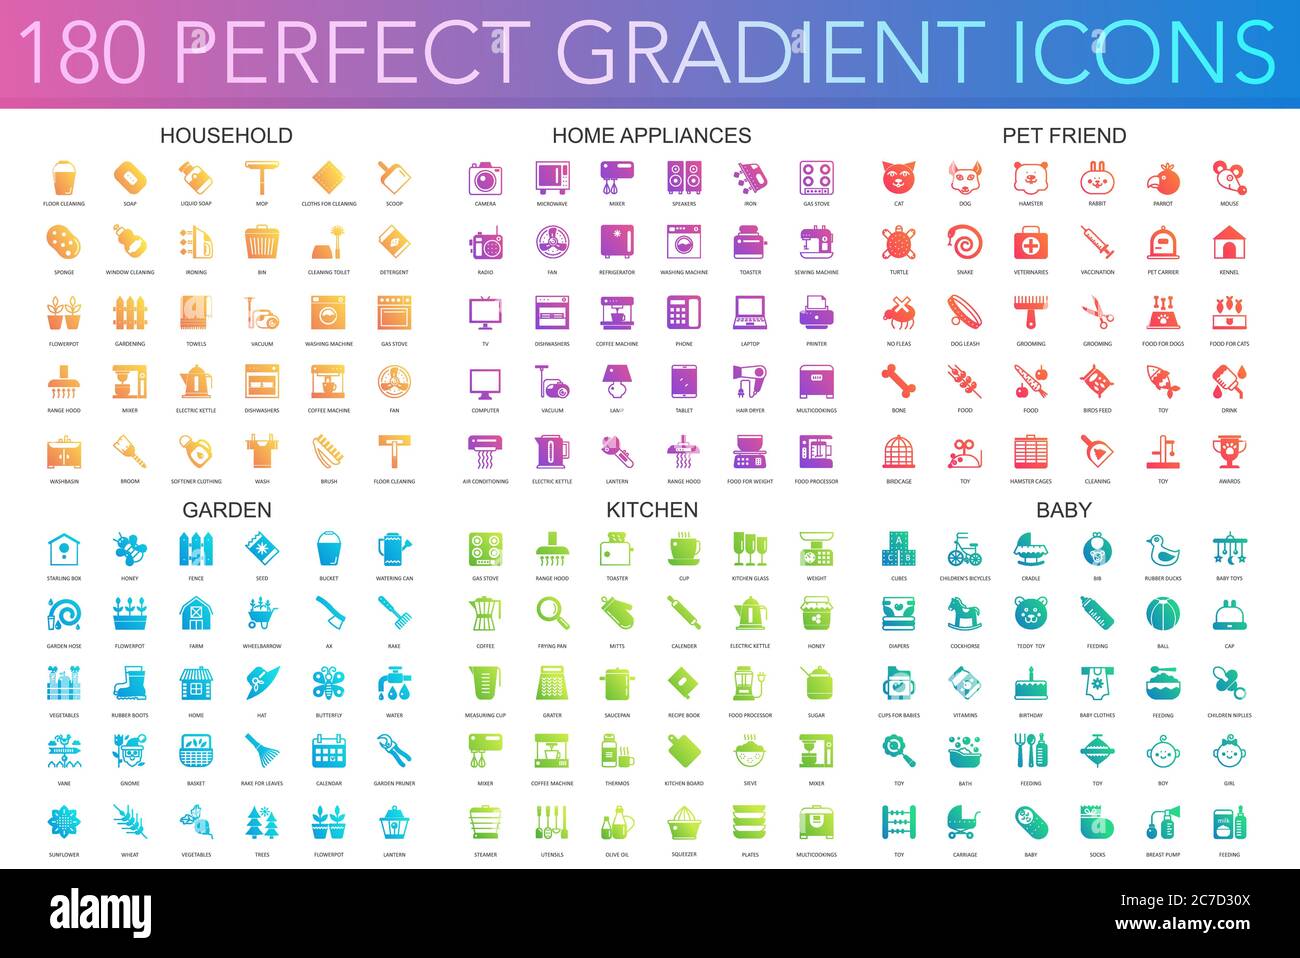 180 vector trendy perfect gradient icons set of household, home appliances, pet friend, garden, kitchen, baby Stock Vector